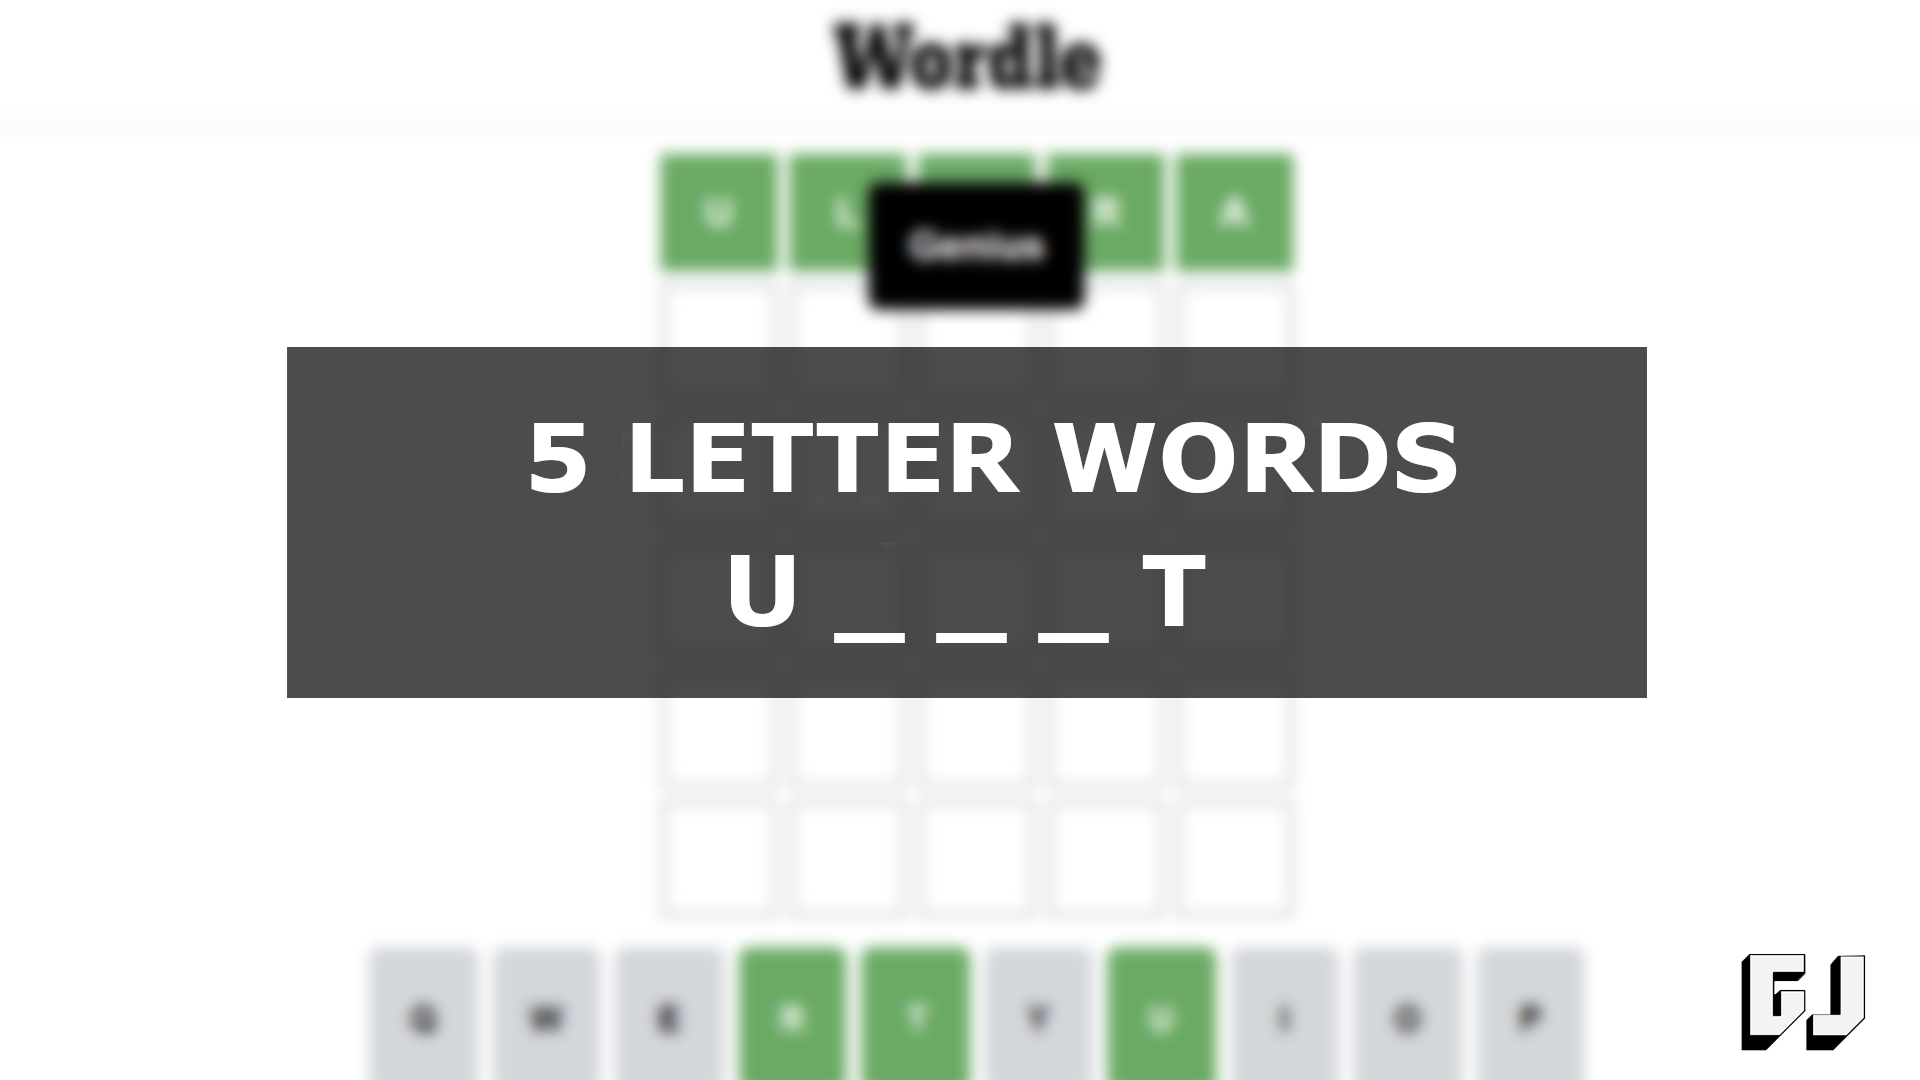 Слово 5 букв последняя ч. Игра 5 букв тинькофф. Слова в тинькофф игра. 5 Letter Words. Слова из пяти букв игра в тинькофф.